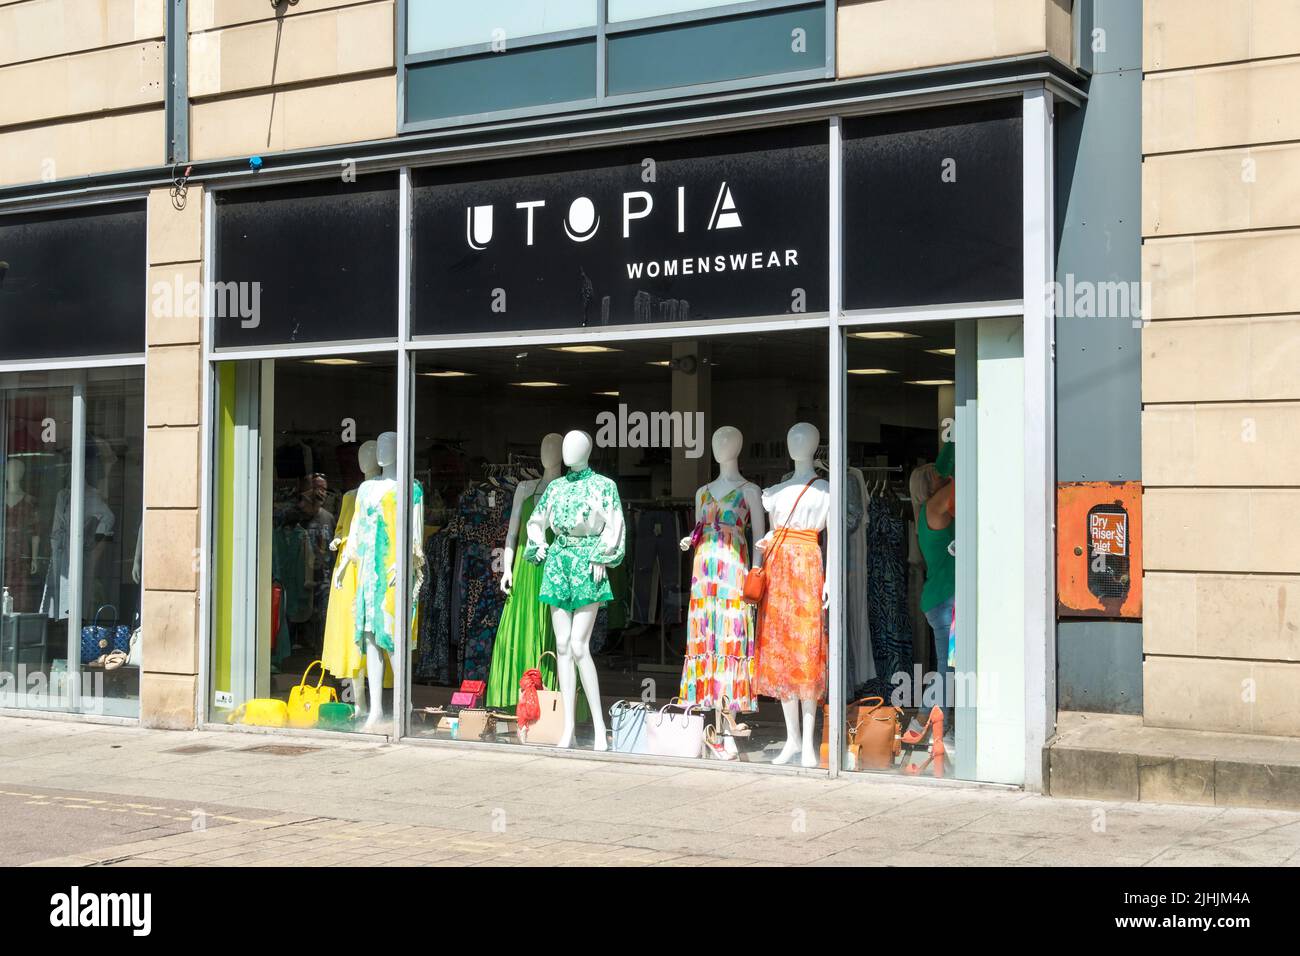 Utopia womenswear shop window displaying summer clothing, Spurriergate York city 2022 Stock Photo